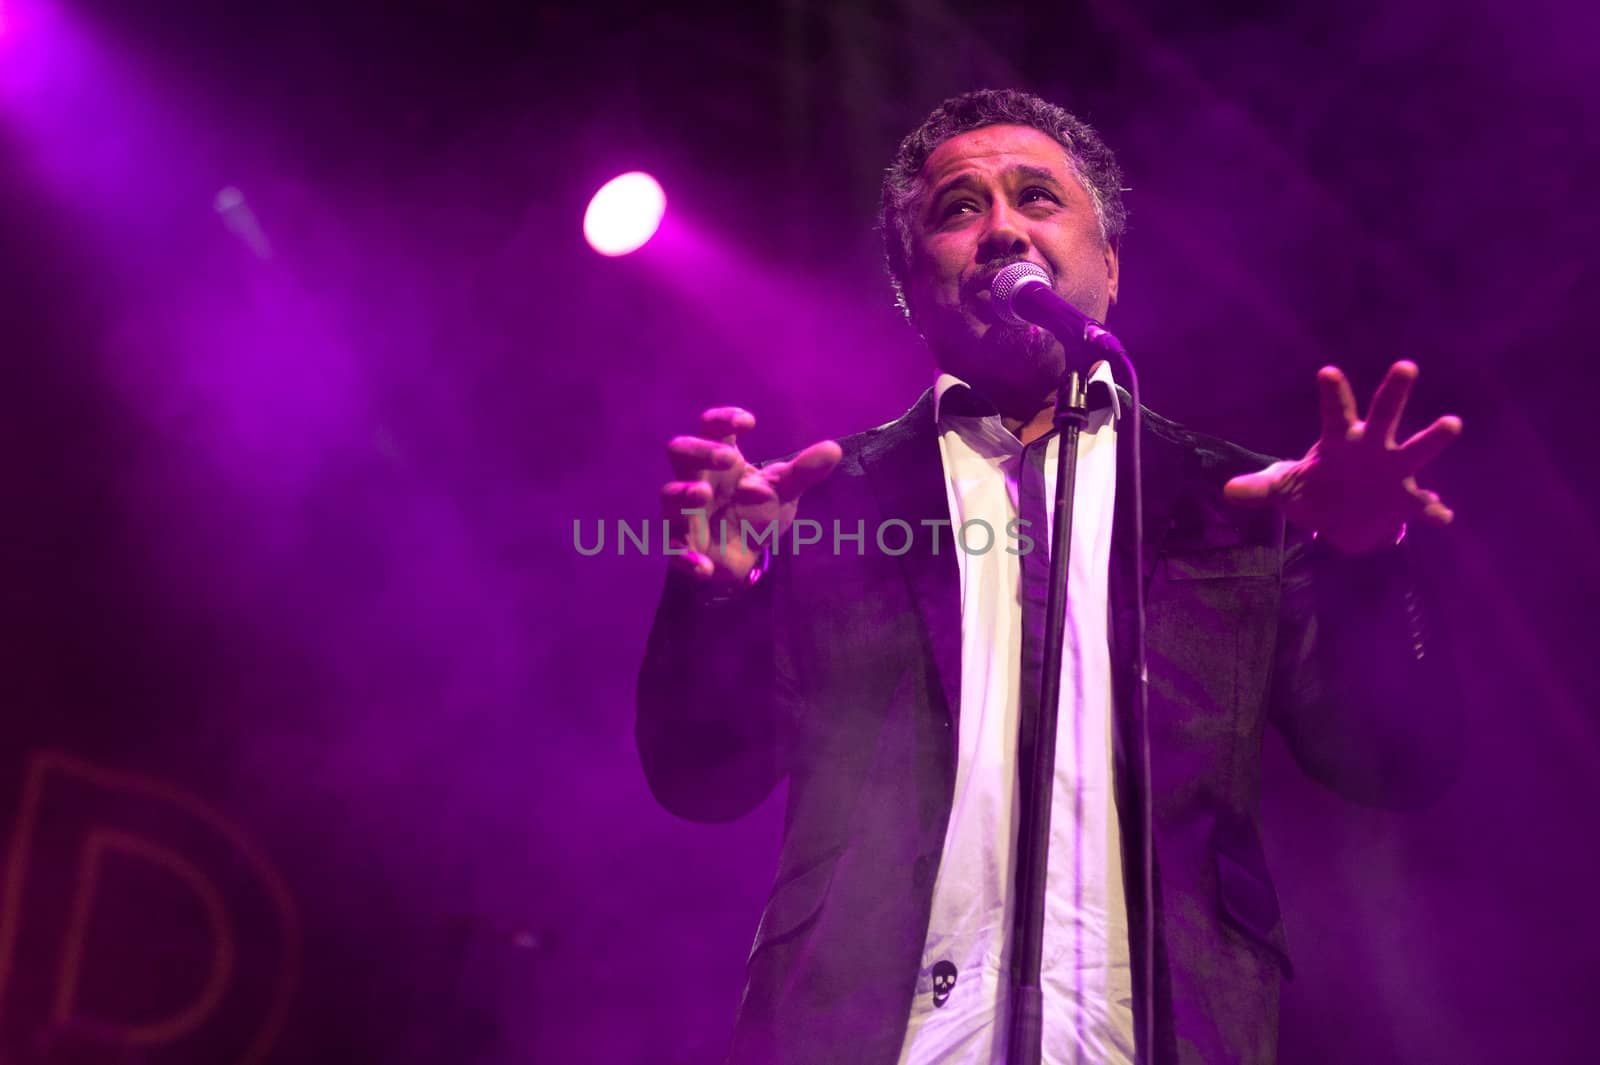 CANARY ISLANDS - NOVEMBER 12: Singer Khaled Hadj Ibrahim (Khaled) from Algeria performing onstage during Womad 2011 November 12, 2011 in Las Palmas, Canary islands, Spain